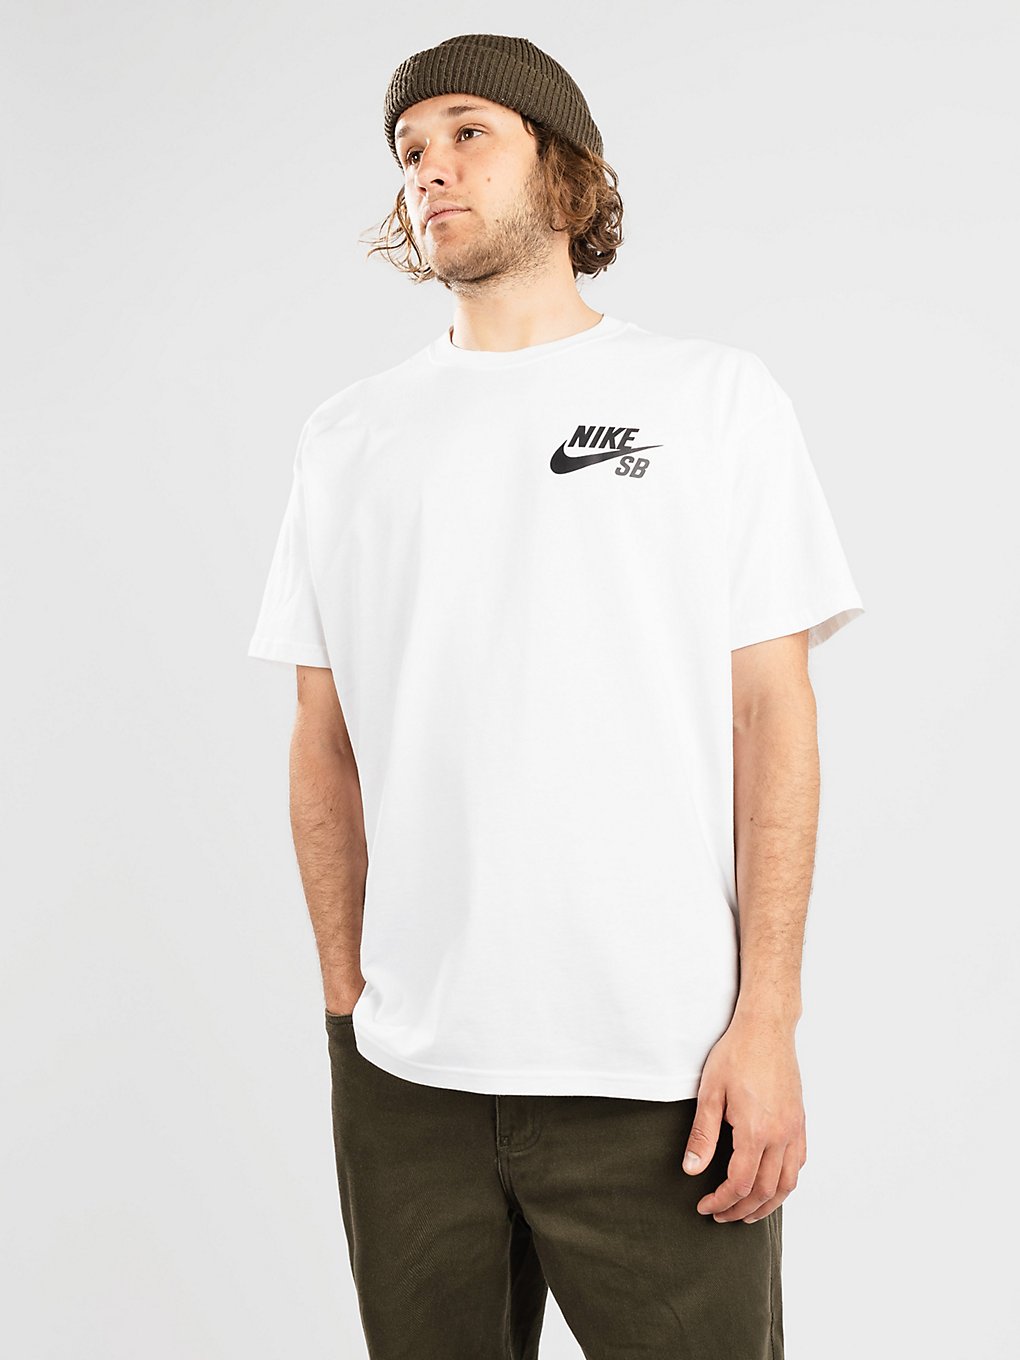 Nike Sb T-Shirt black kaufen